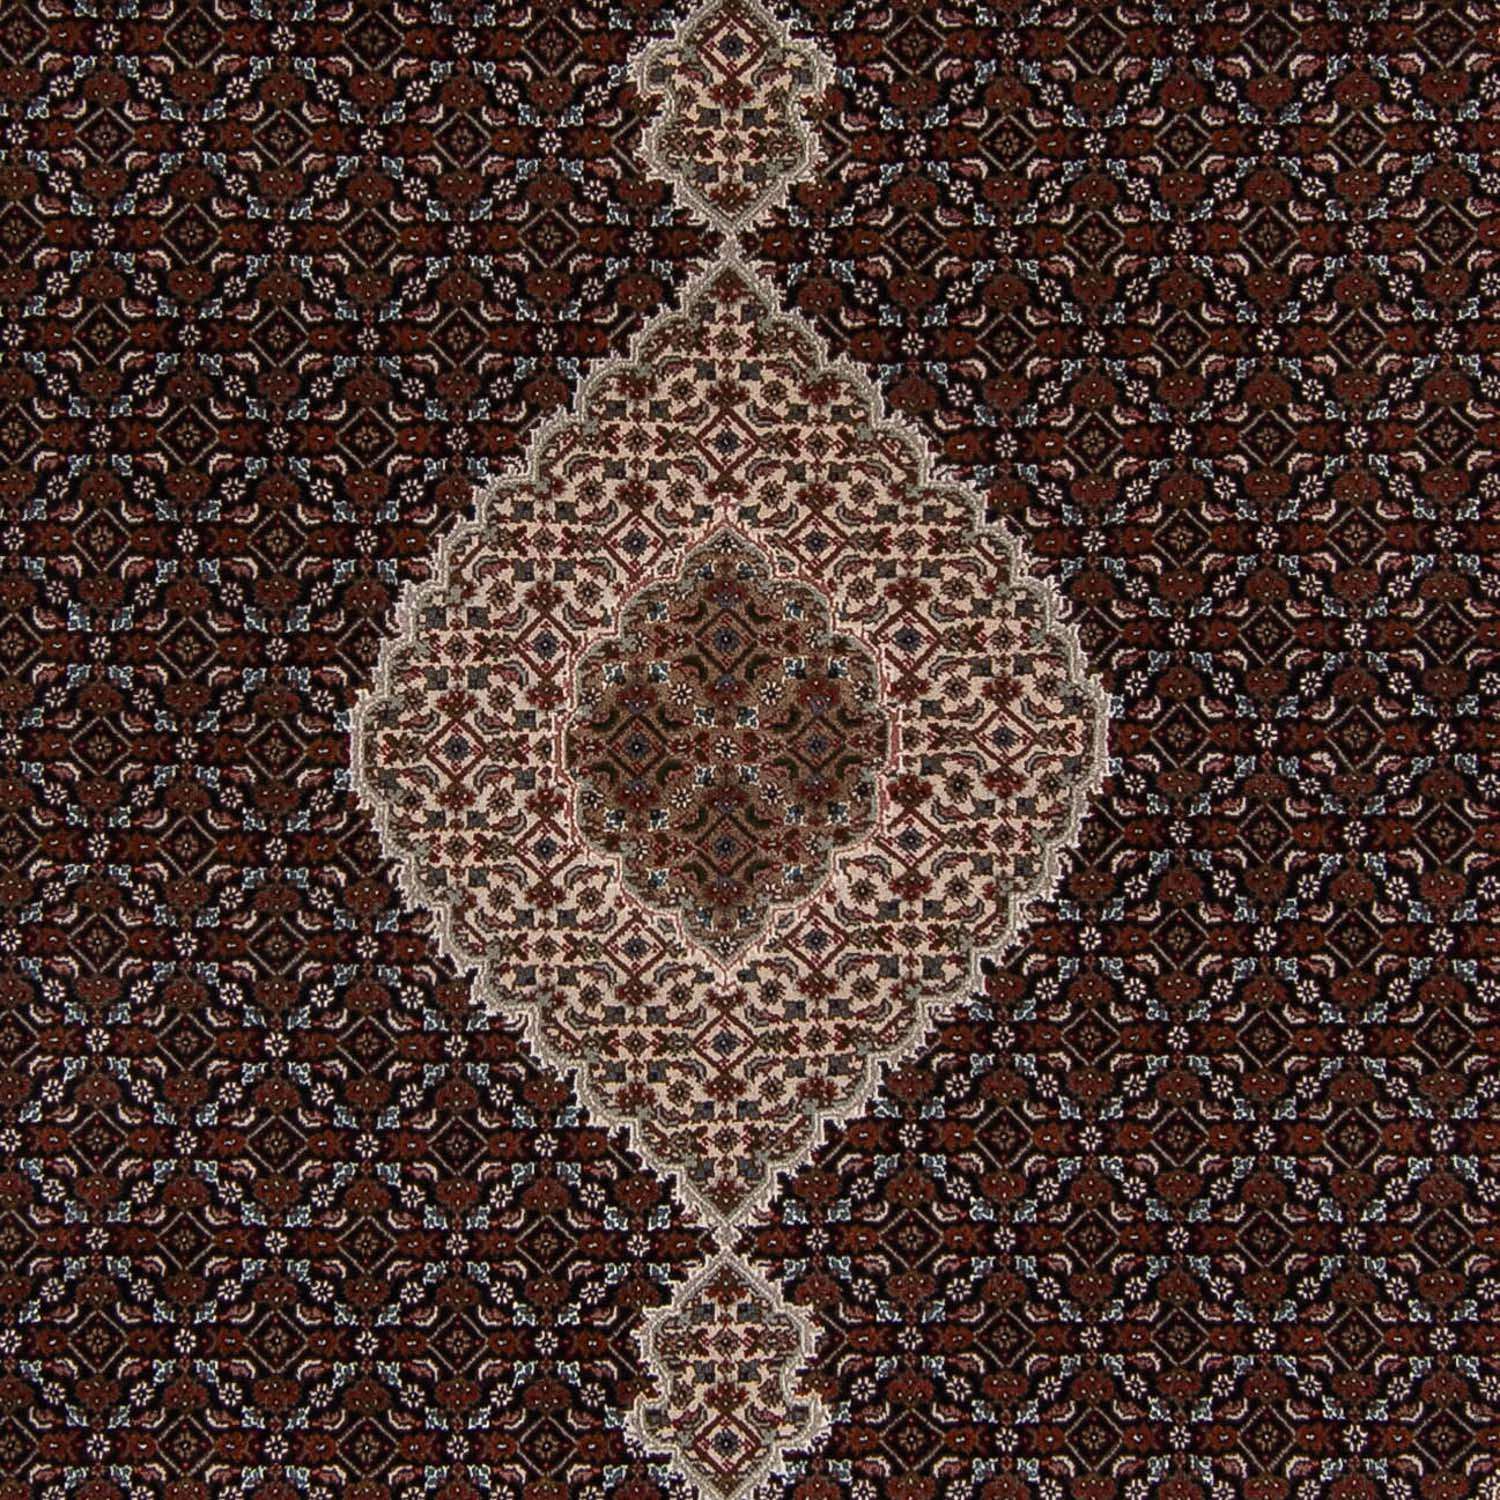 Persisk matta - Tabriz - 253 x 203 cm - mörkblå